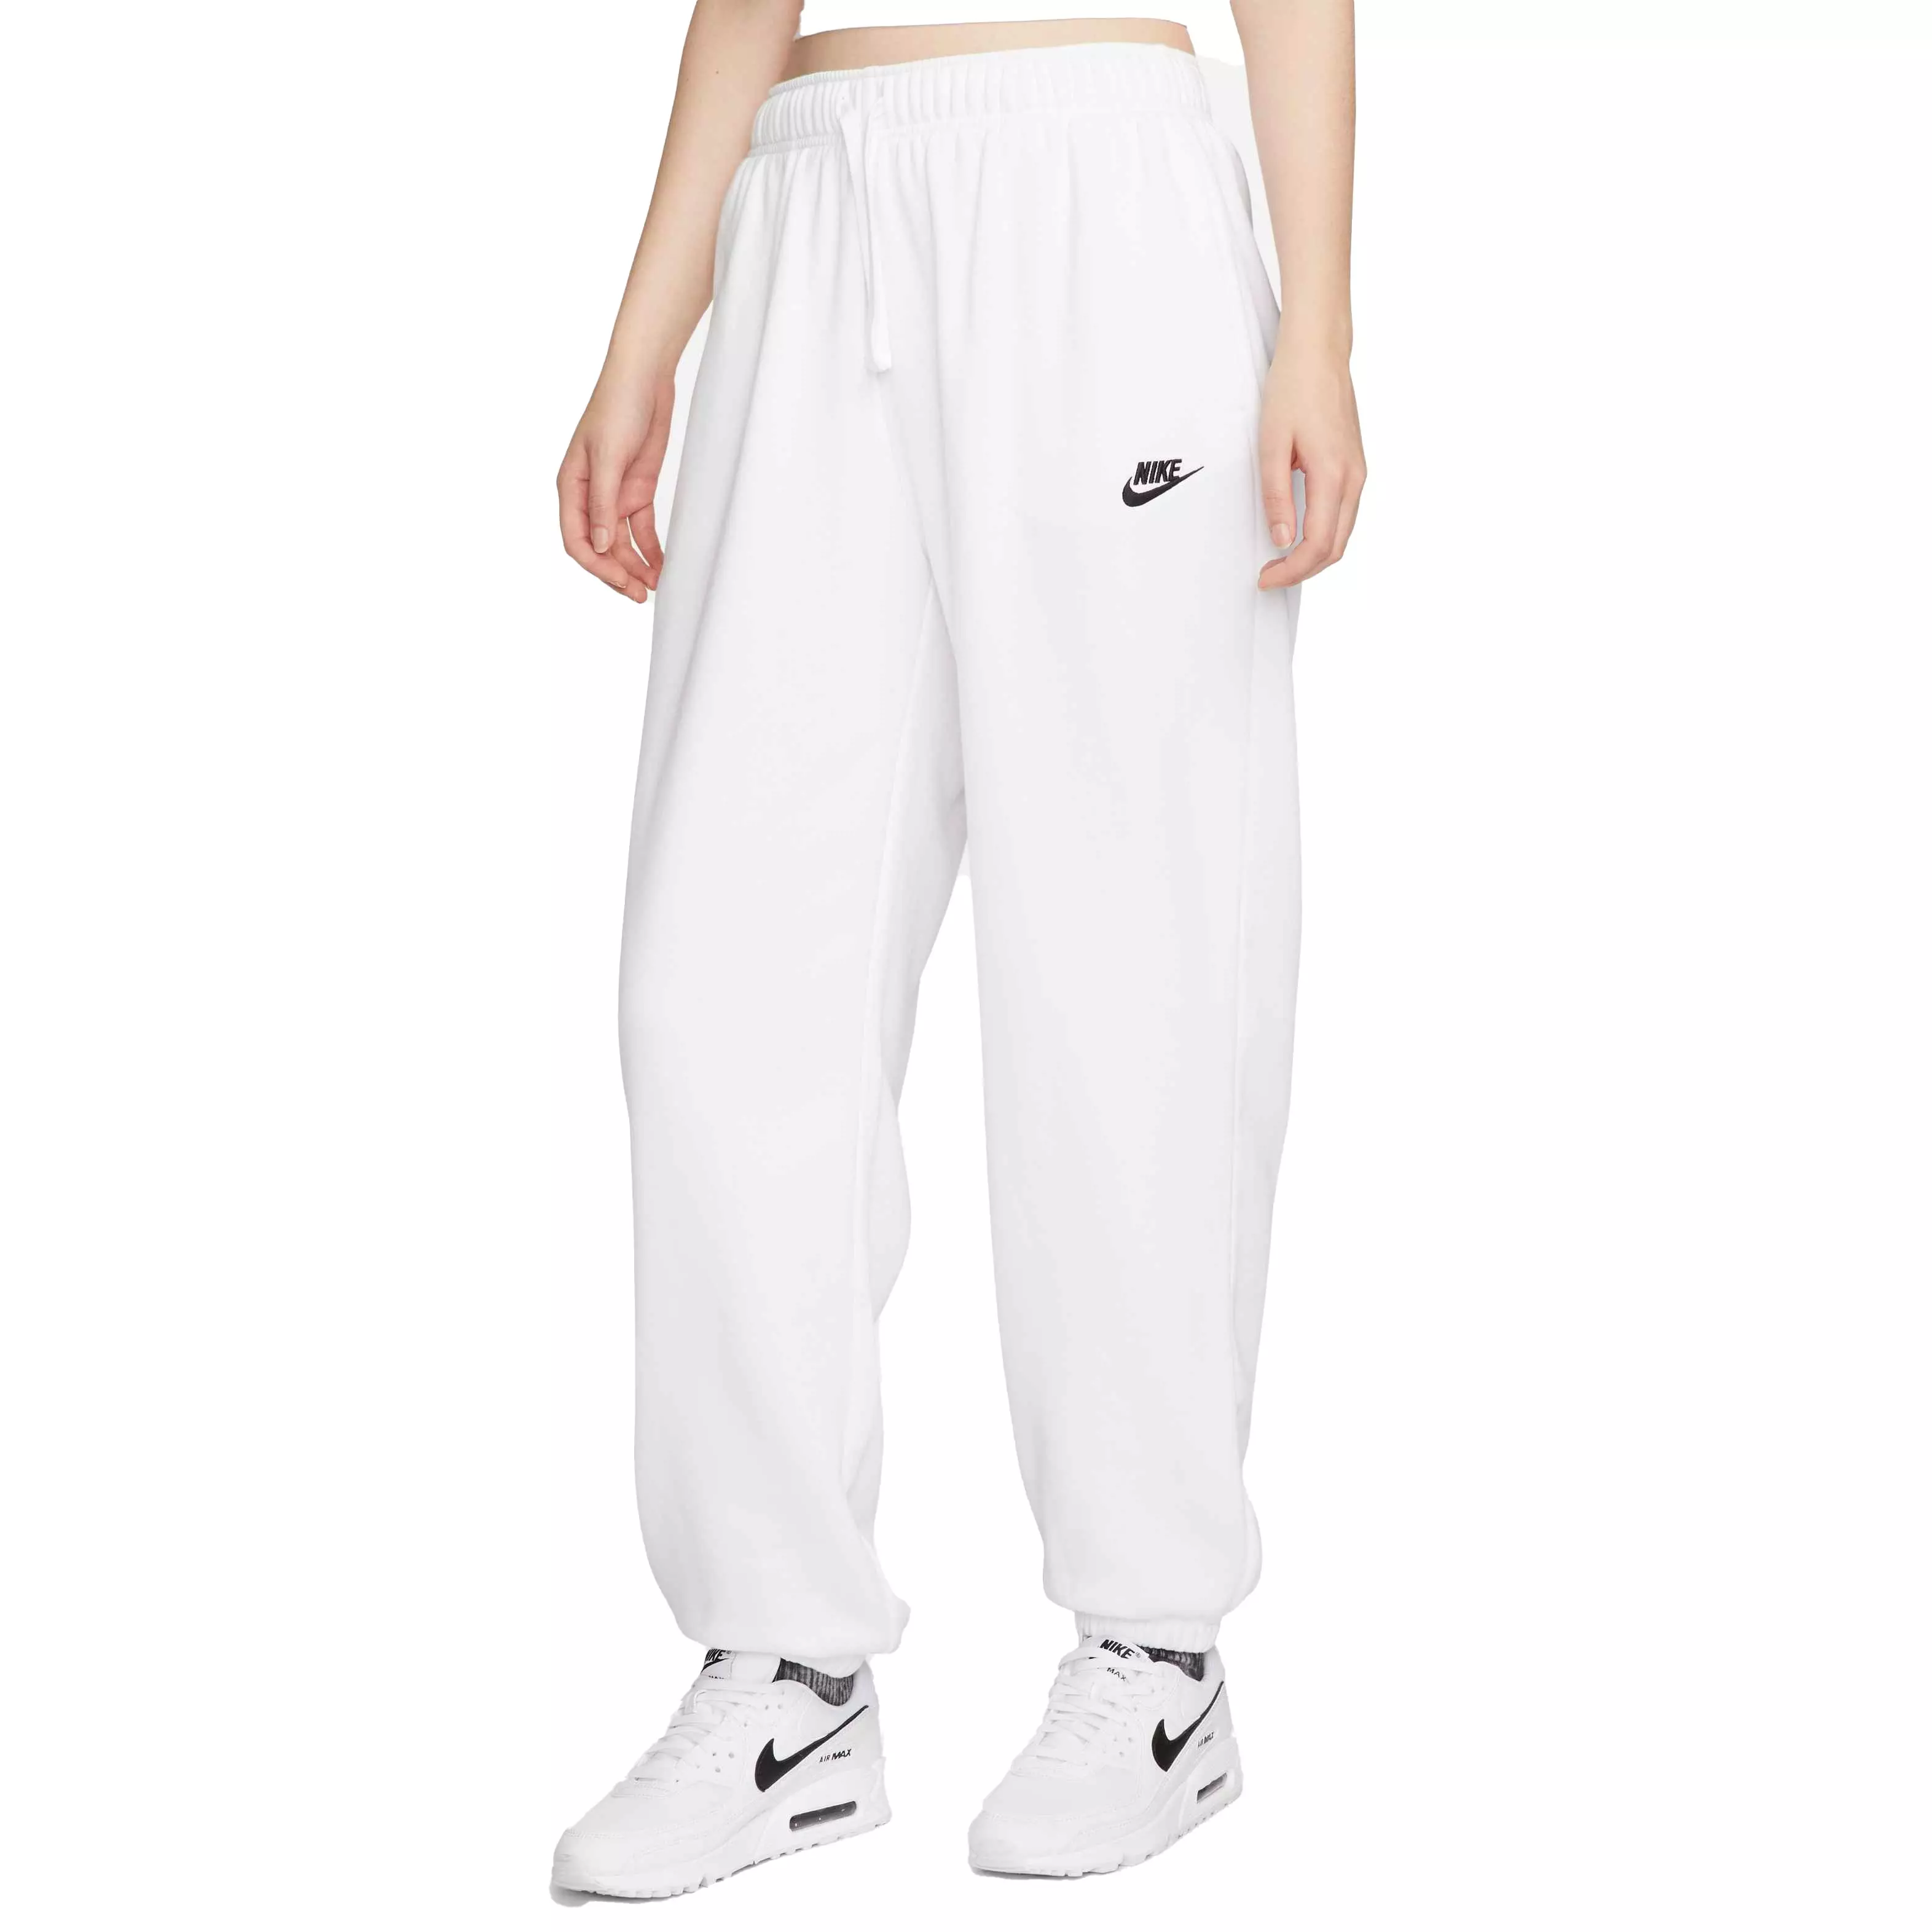 New Balance Essentials Womens Sweatpants White XL